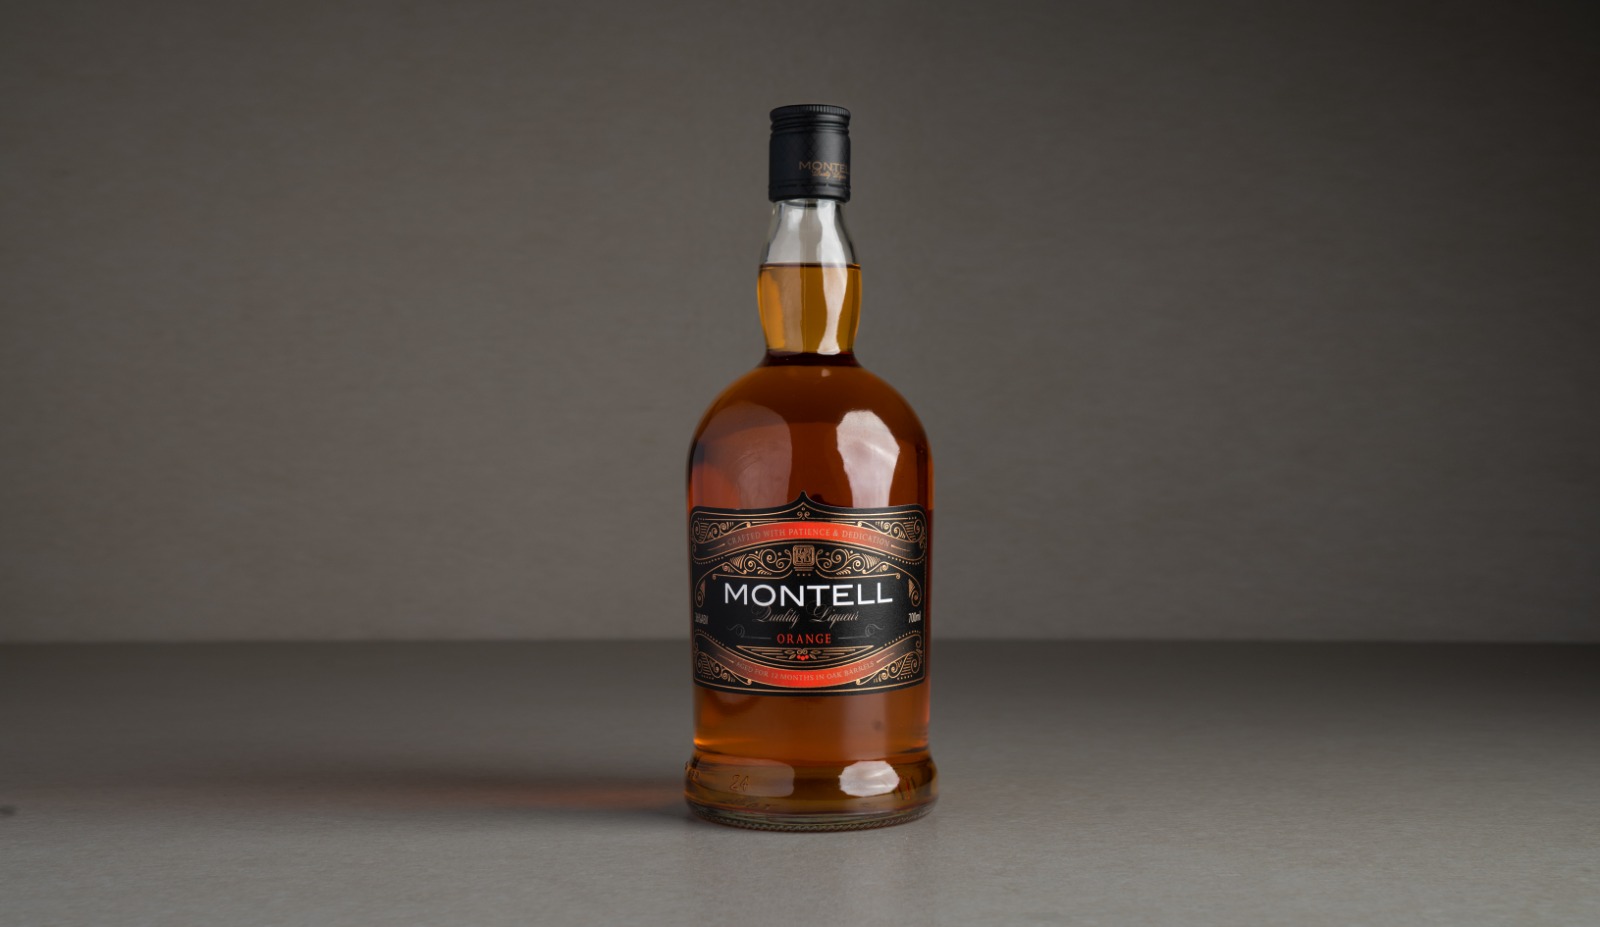 Montell Orange whiskey